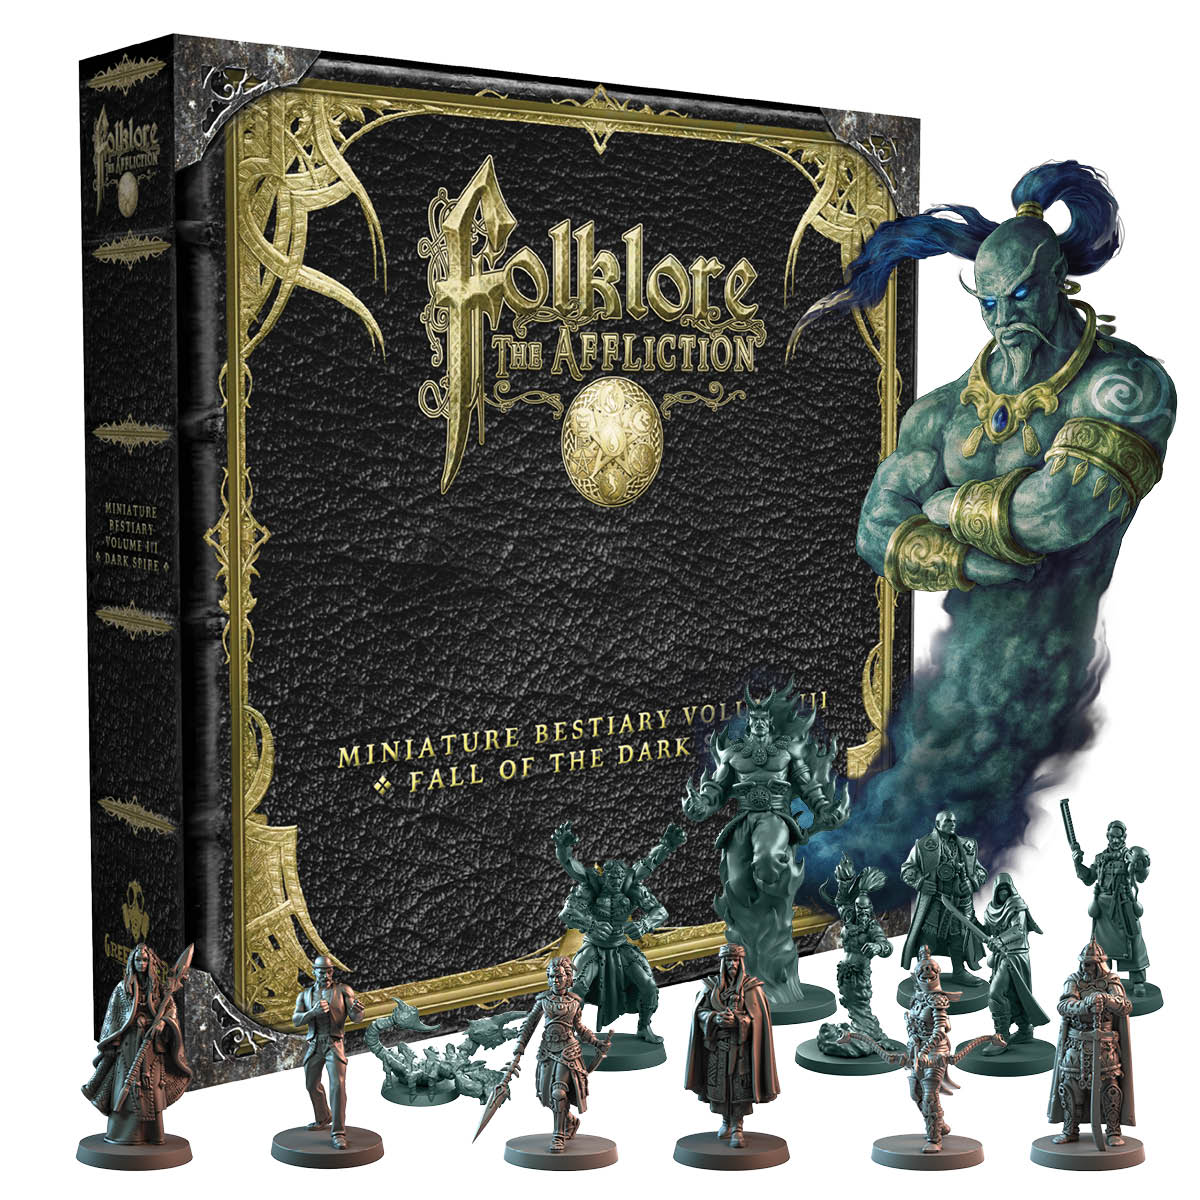 FL64 - Folklore Miniature Bestiary 03 (Fall of the Dark Spire) – Greenbrier  Games Inc.